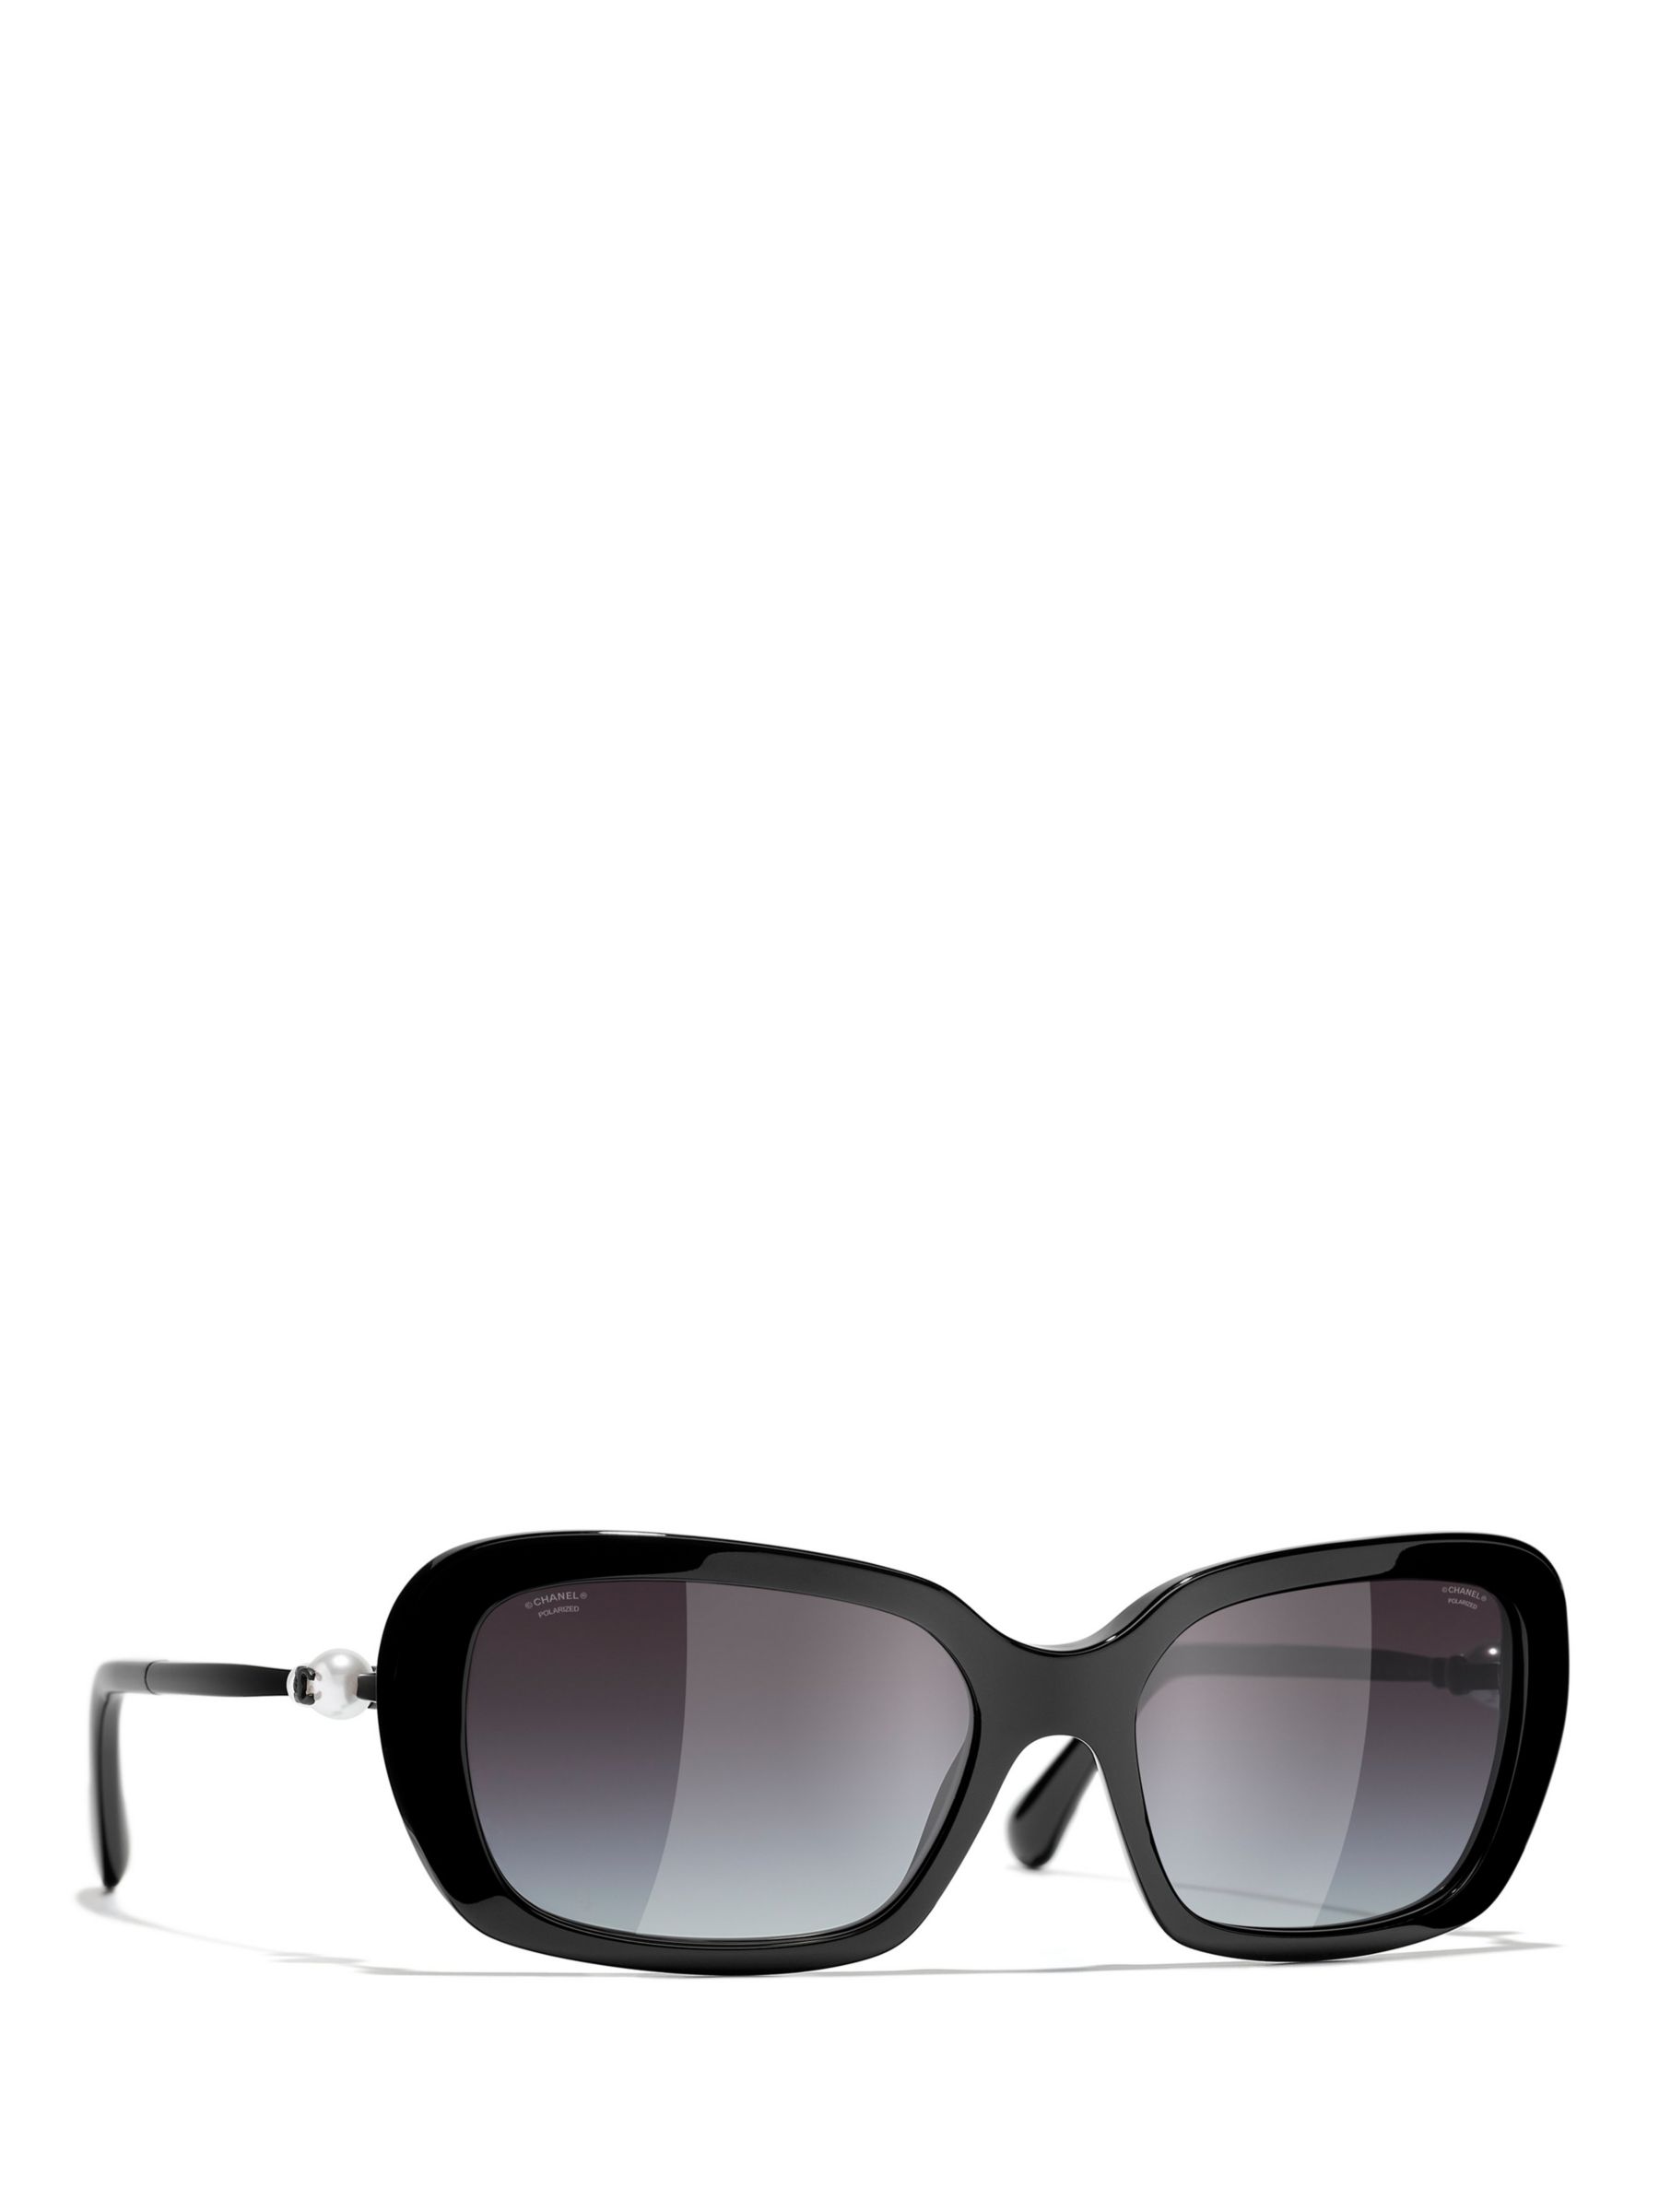 CHANEL Rectangular Sunglasses CH5427H Black/Grey Gradient at John